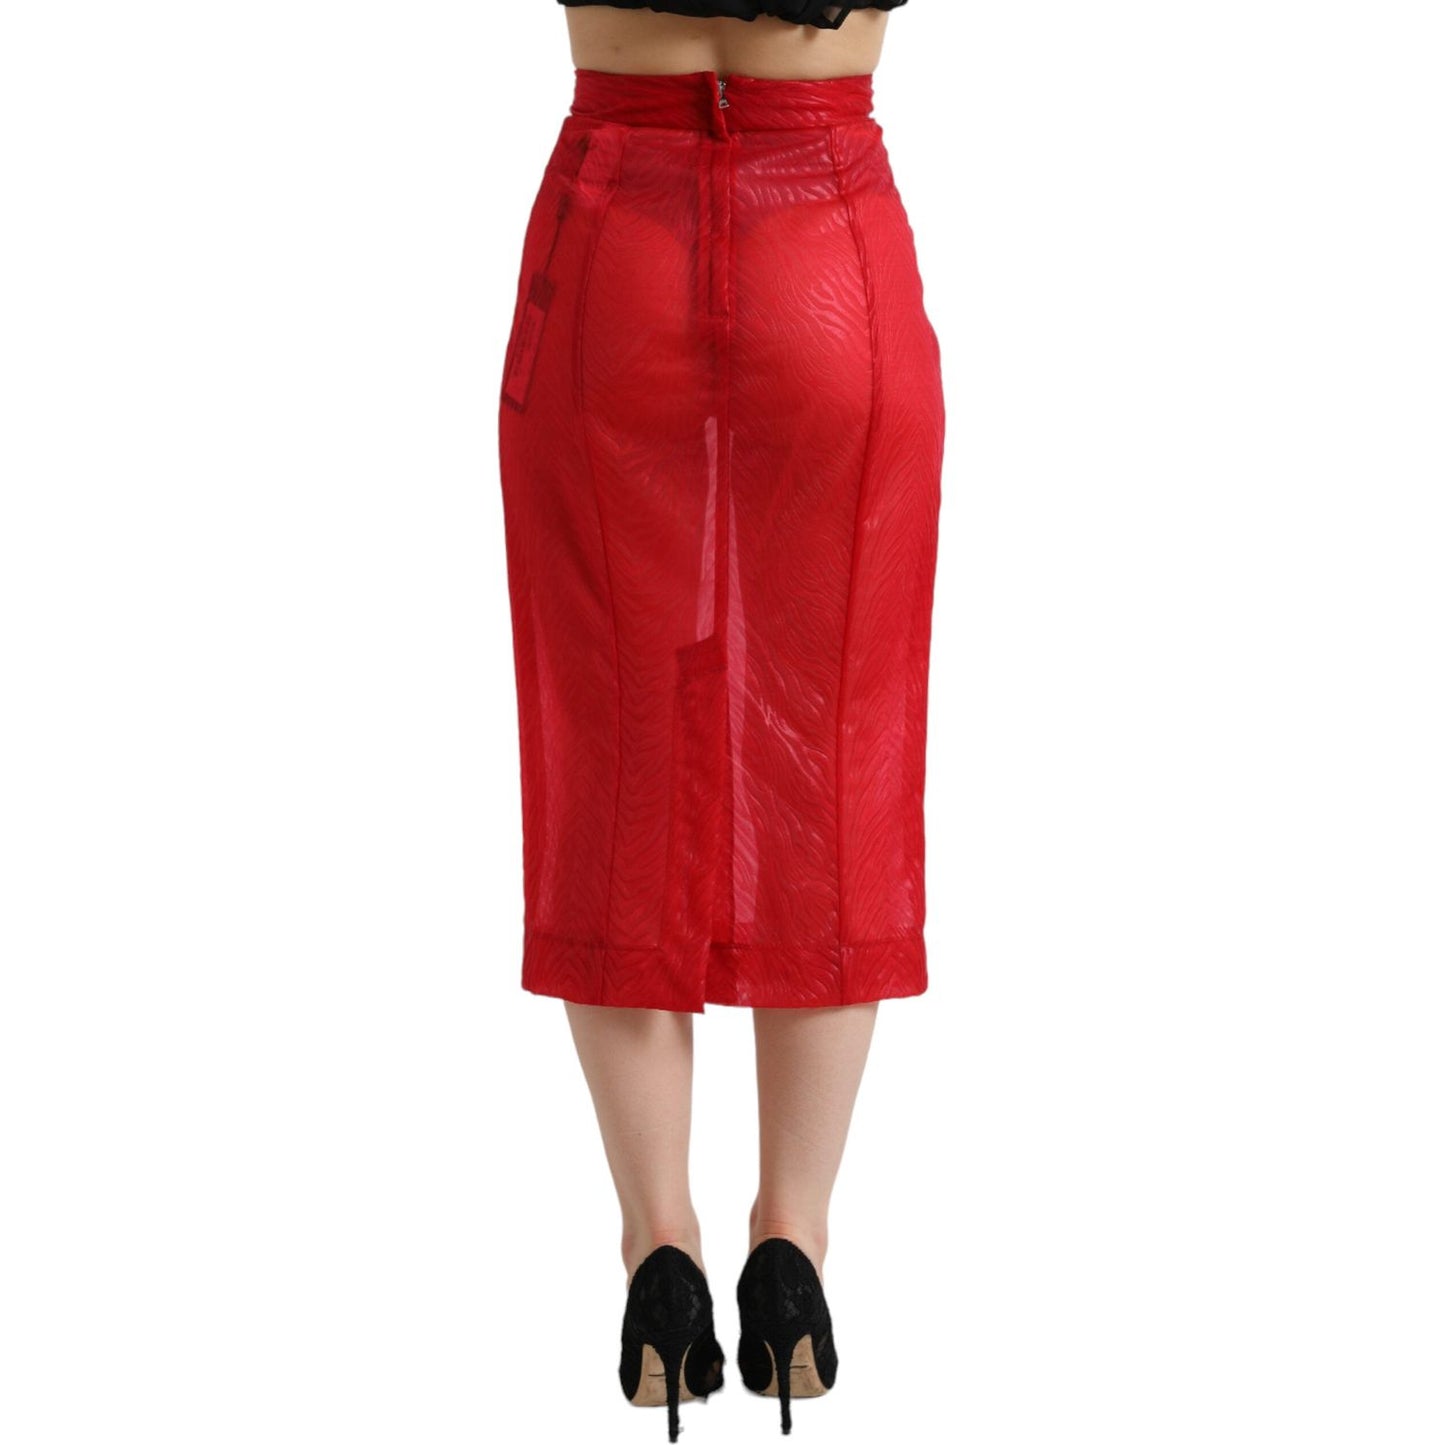 Dolce & Gabbana Chic Red High Waist Sheer Midi Skirt red-sheer-high-waist-pencil-cut-midi-skirt 465A1821-bg-scaled-5291f037-926.jpg